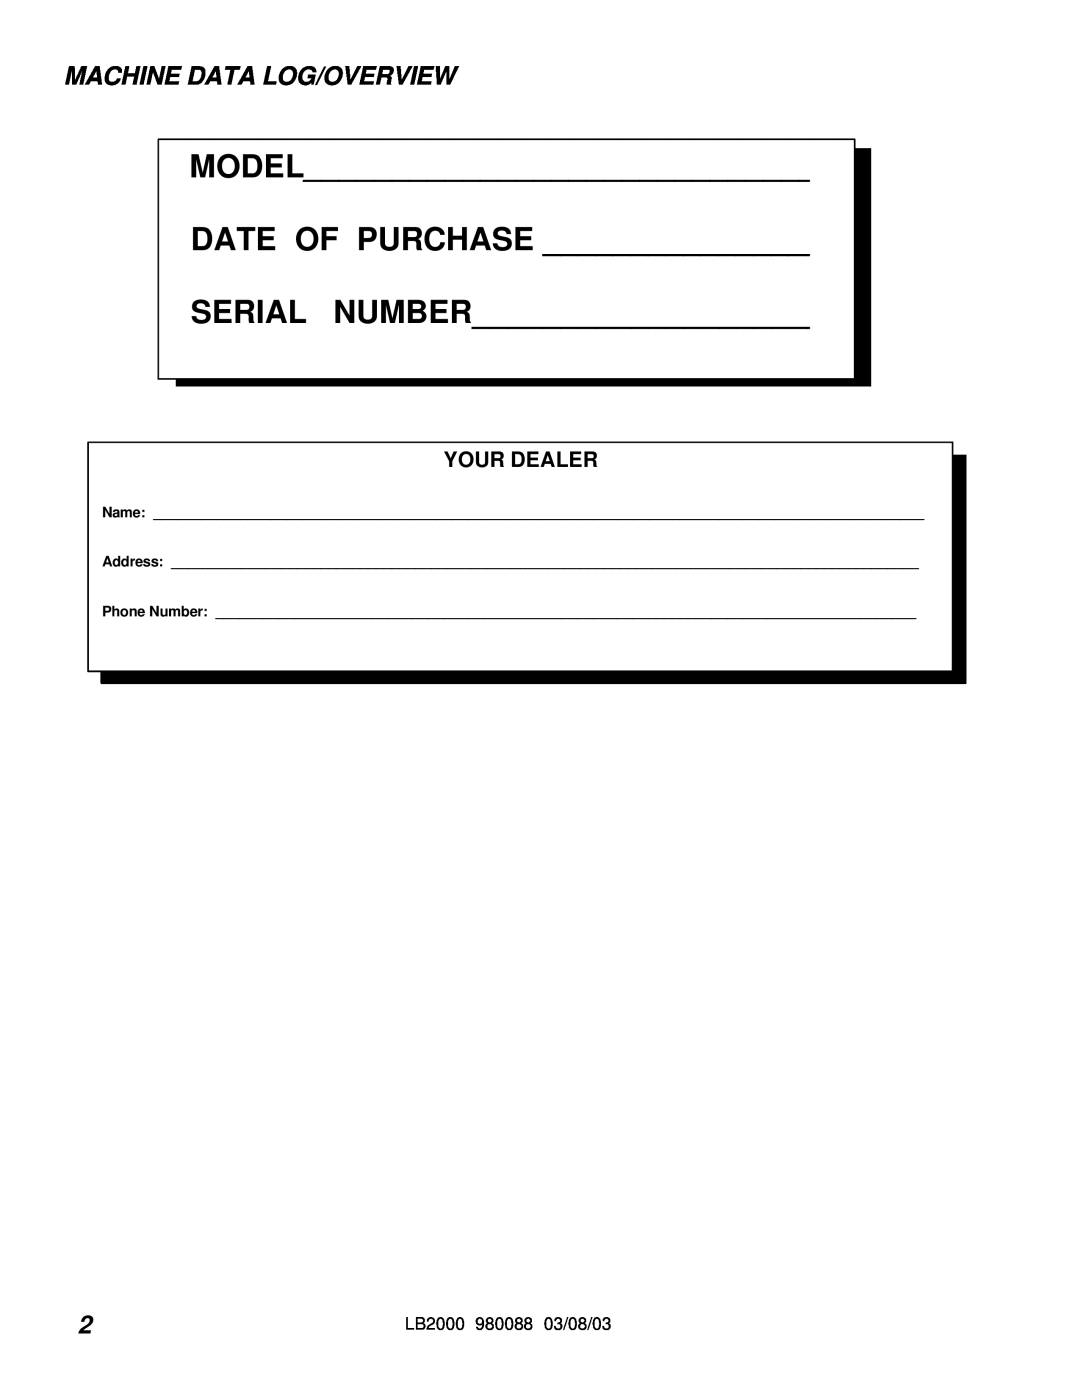 Windsor LB2000 manual Date Of Purchase, Serial Number, Machine Data Log/Overview, Your Dealer, Model 